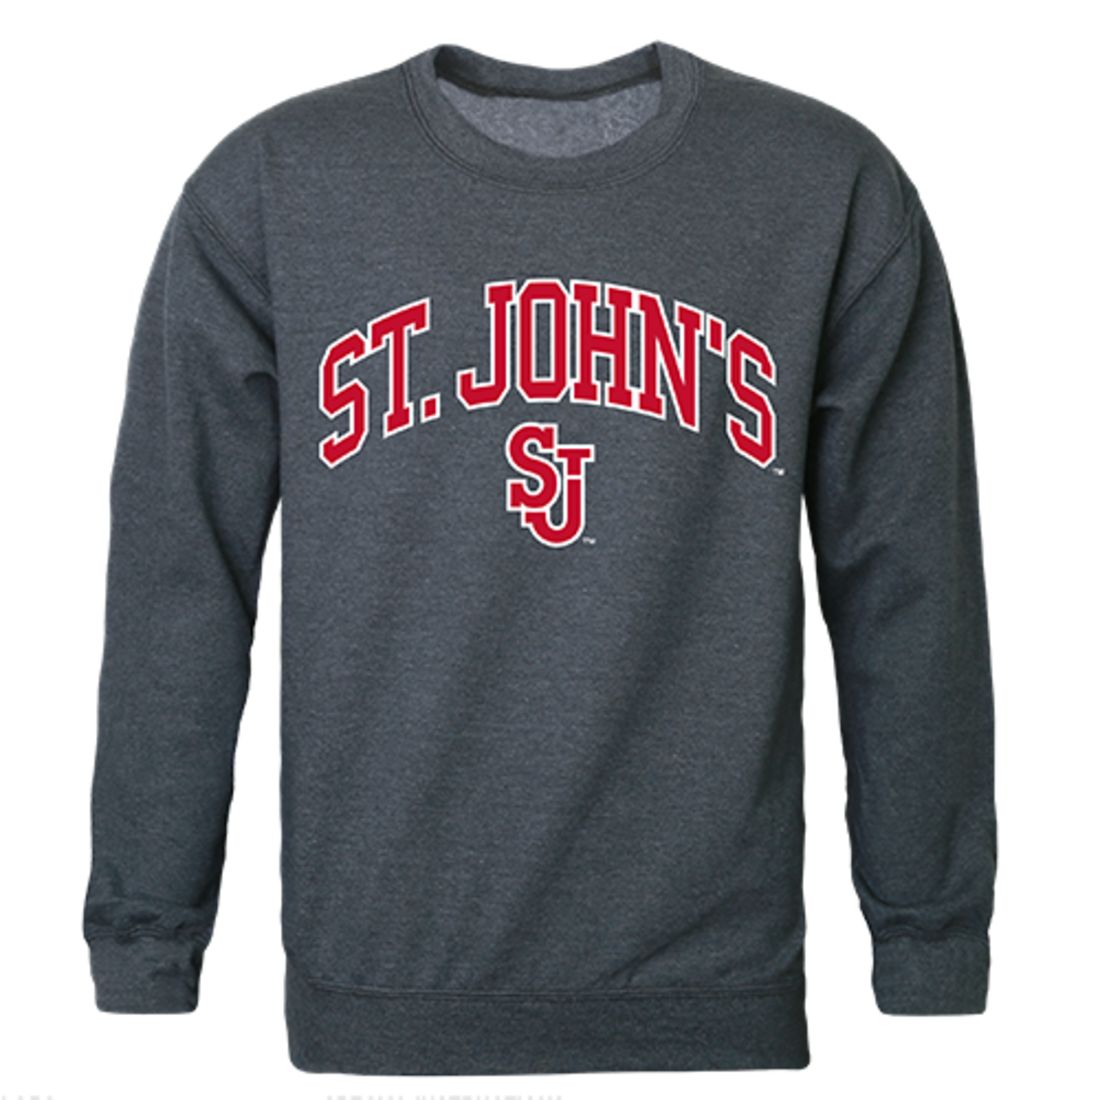 St. John's University Campus Crewneck Pullover Sweatshirt Sweater Heather Charcoal-Campus-Wardrobe